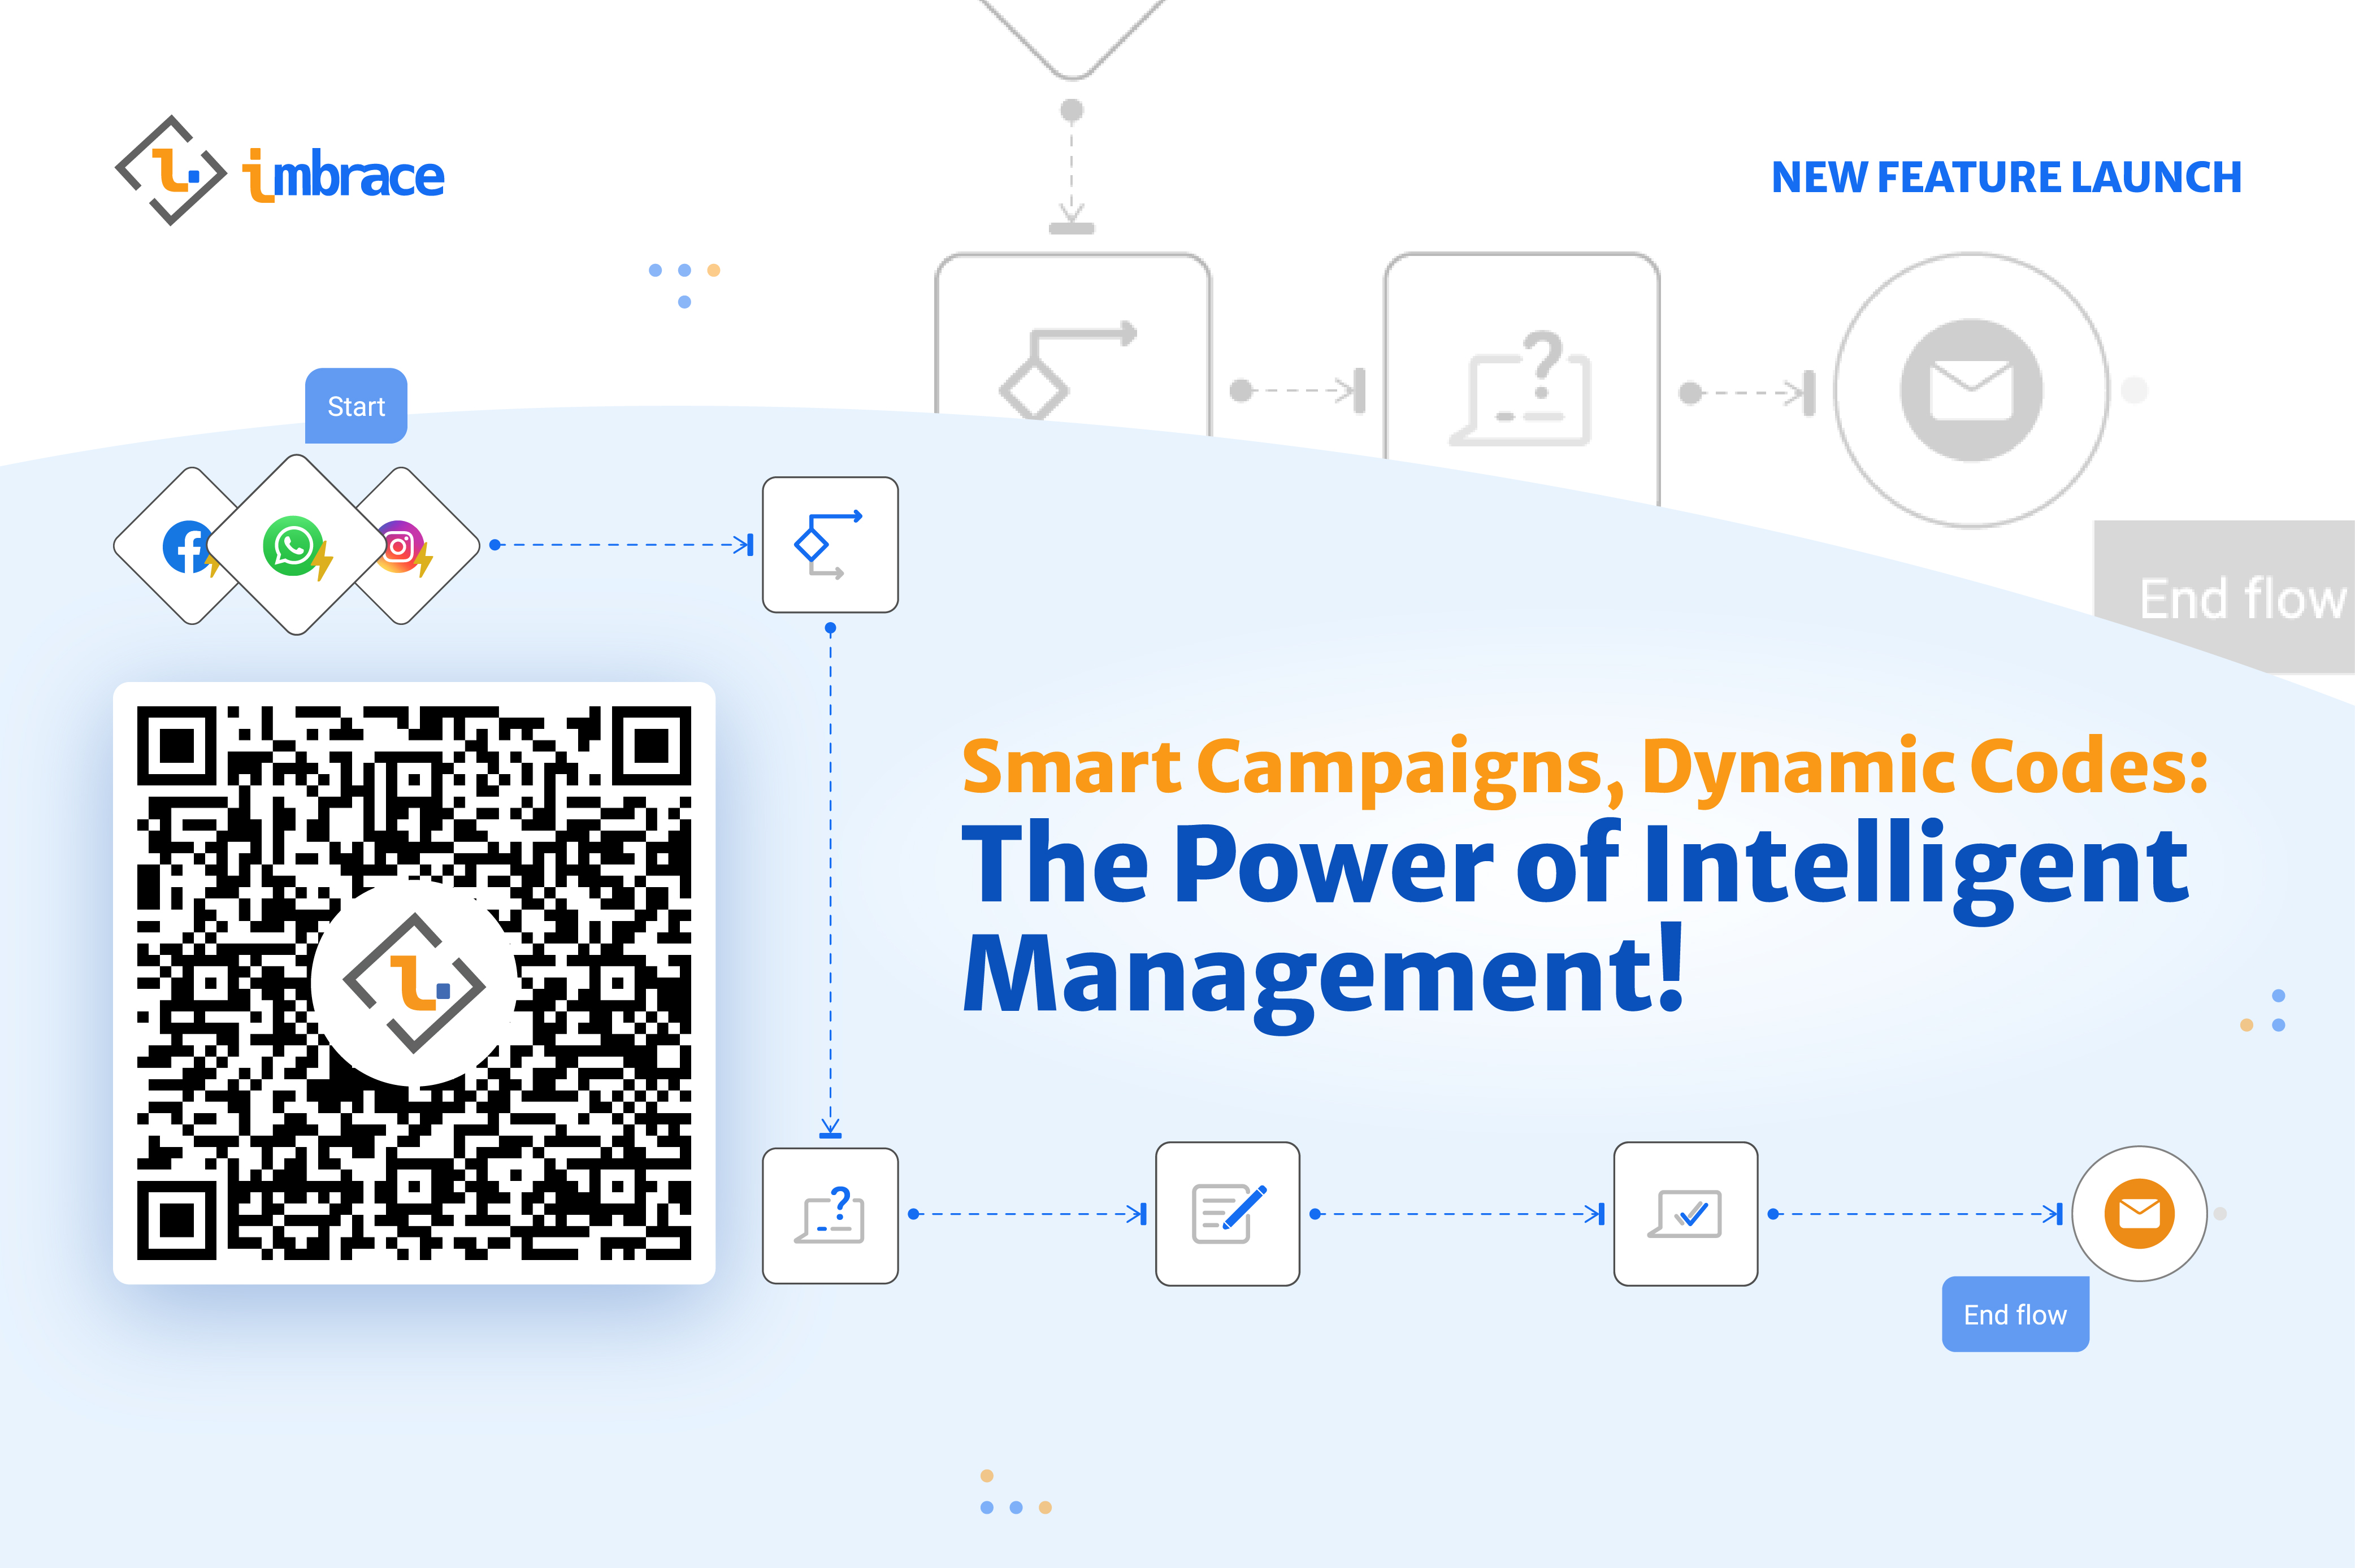 iMBrace's Latest Feature: Intelligent Campaign Management